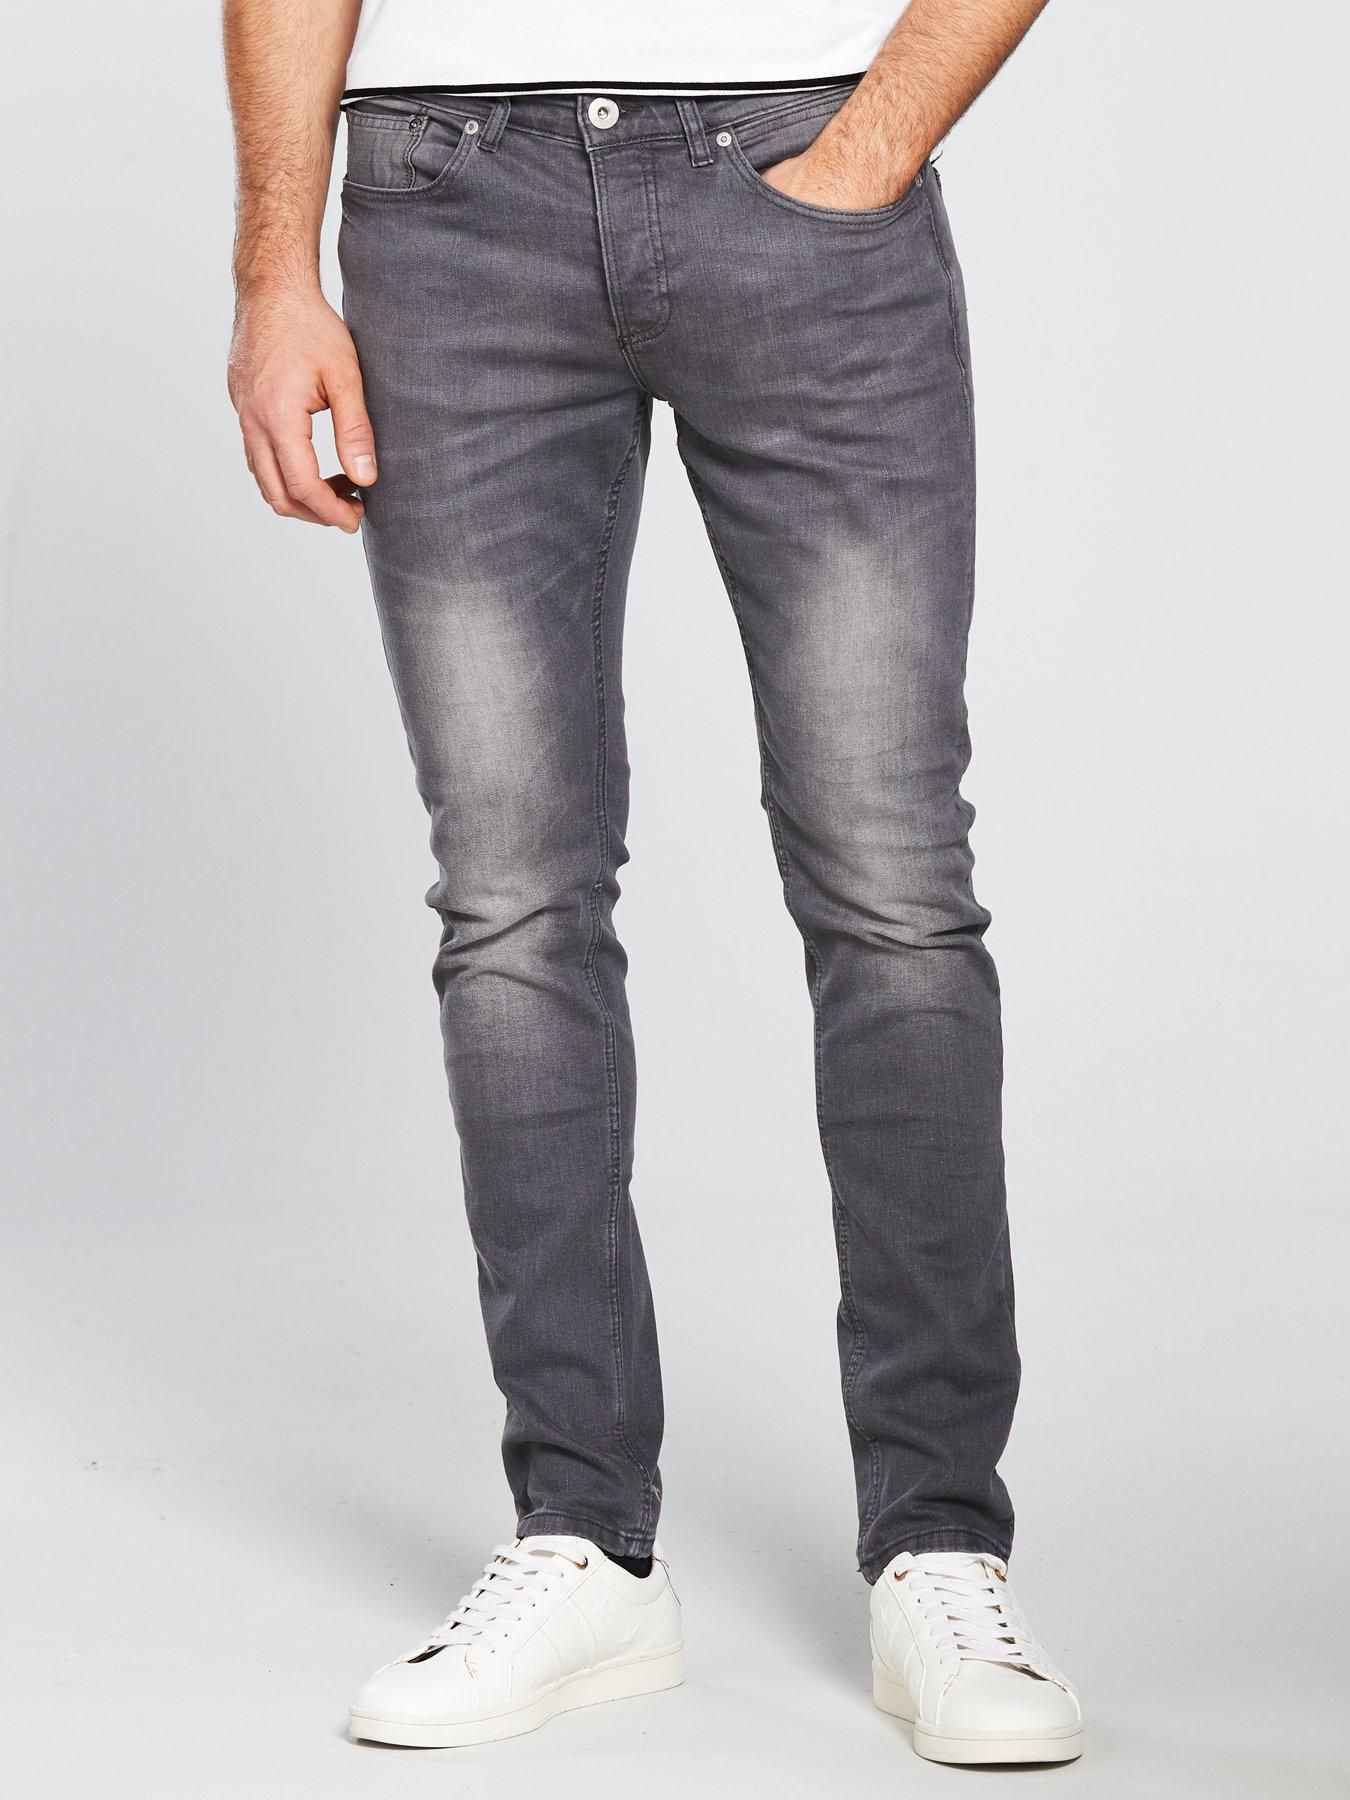 river island mens grey jeans